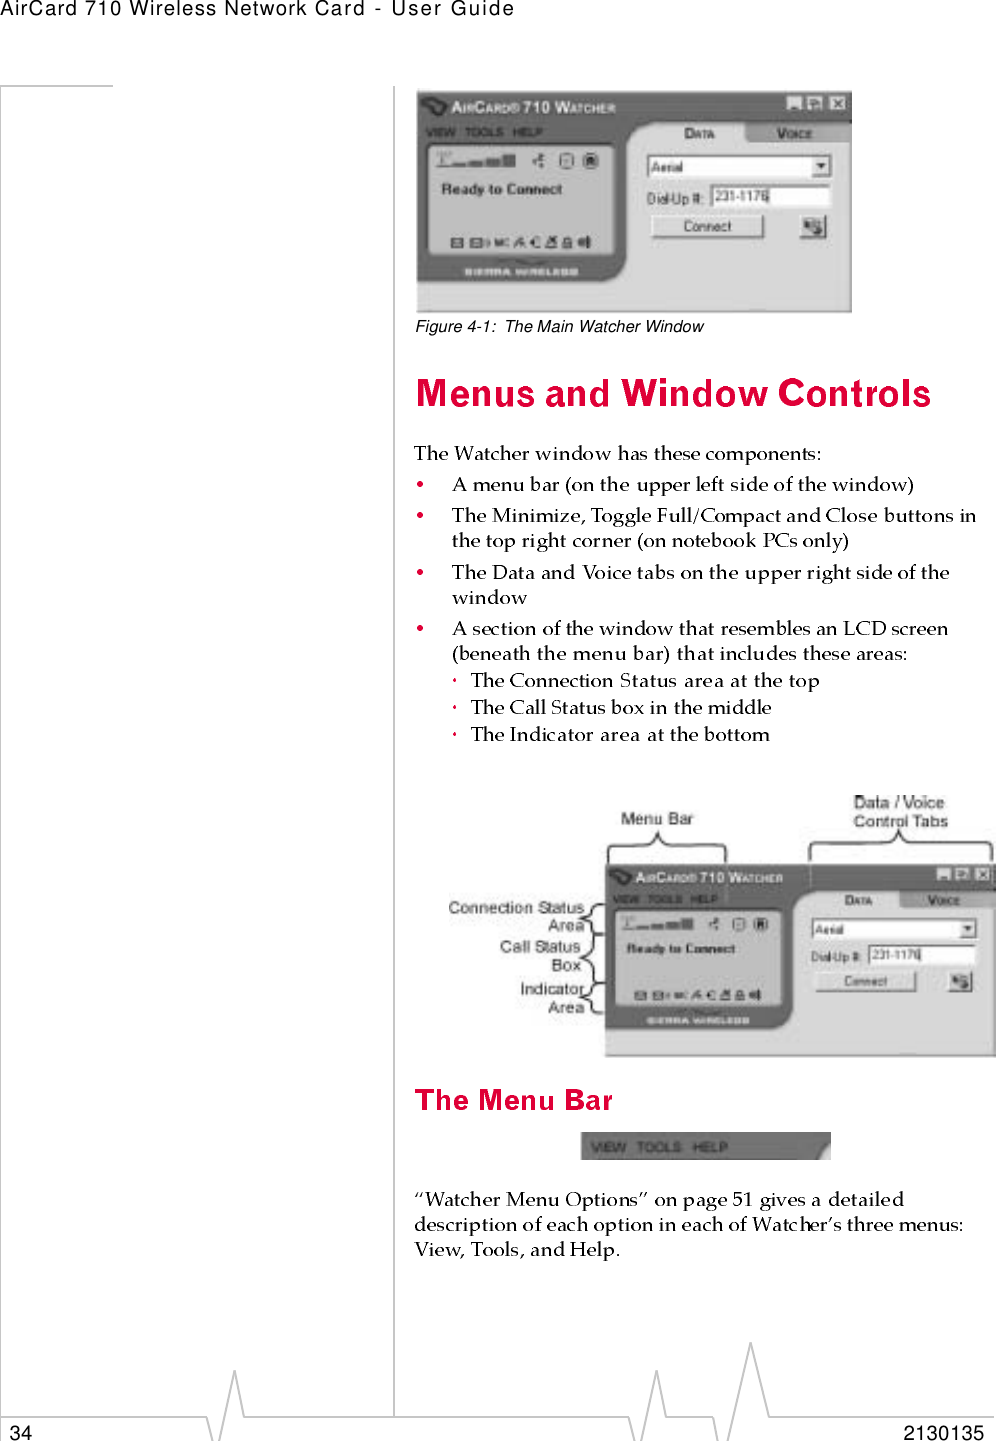 AirCard 710 Wireless Network Card - User Guide34 2130135Figure 4-1: The Main Watcher Window